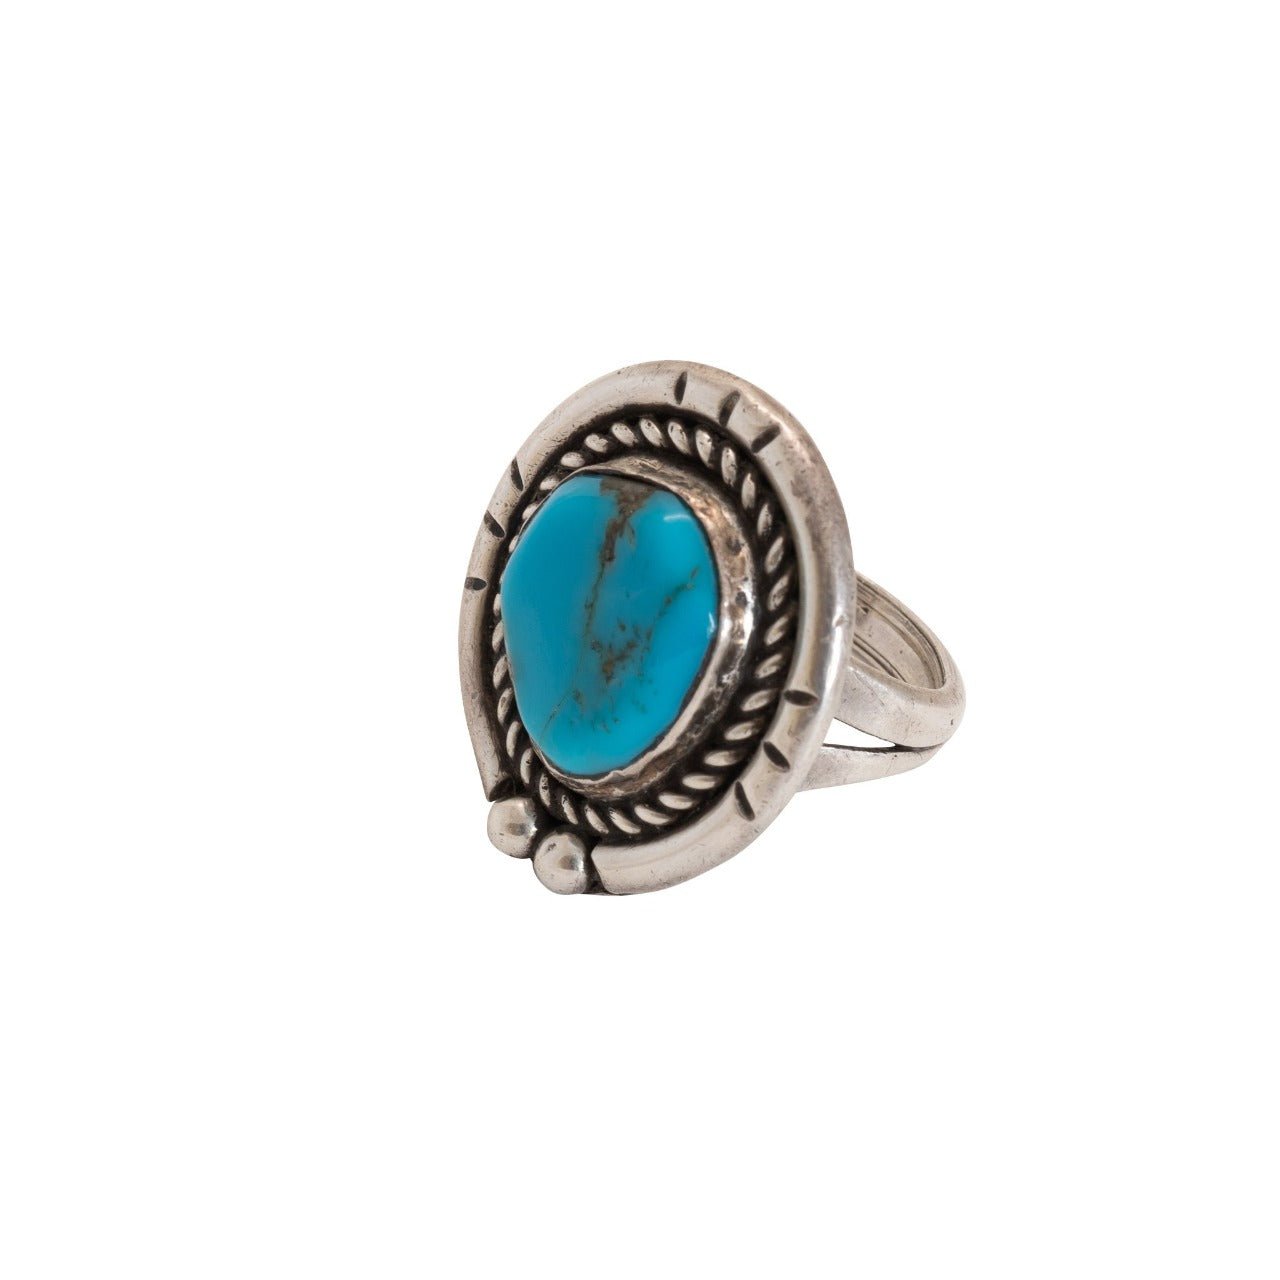 Vintage Navajo Turquoise Ring Small Size - Turquoise & Tufa